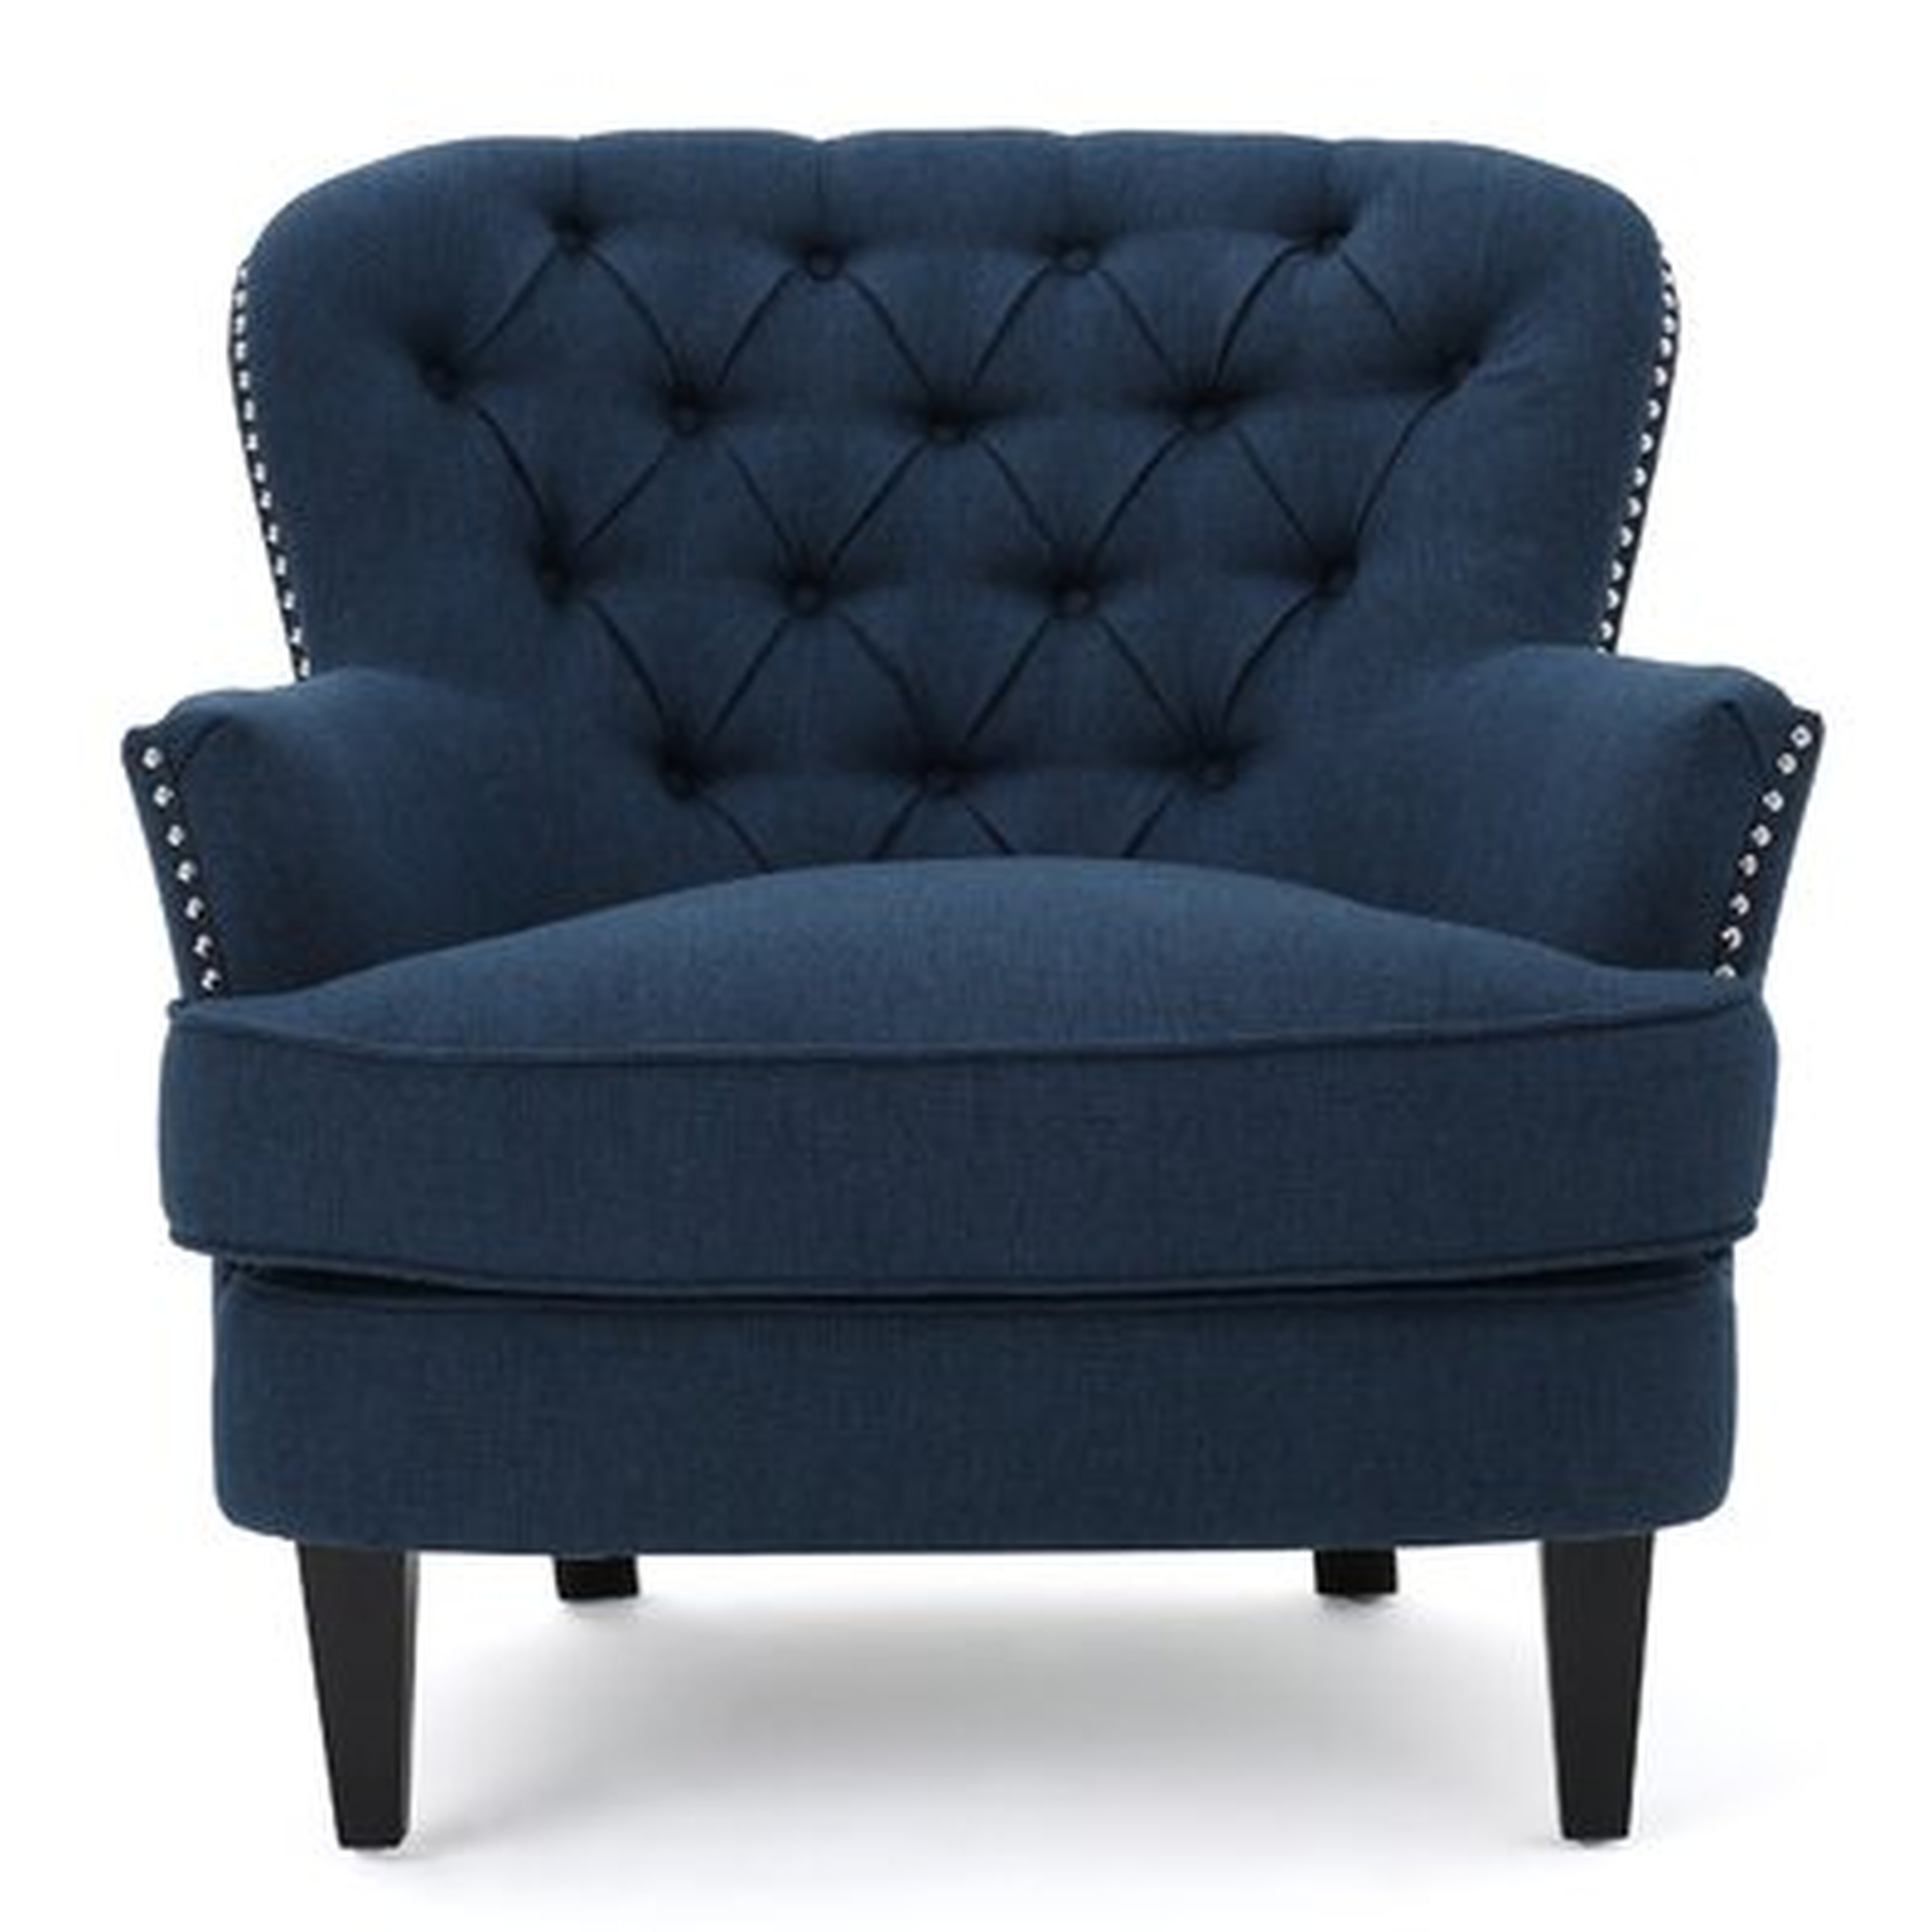 Parmelee 33" Wide Tufted Linen Club Chair - Wayfair